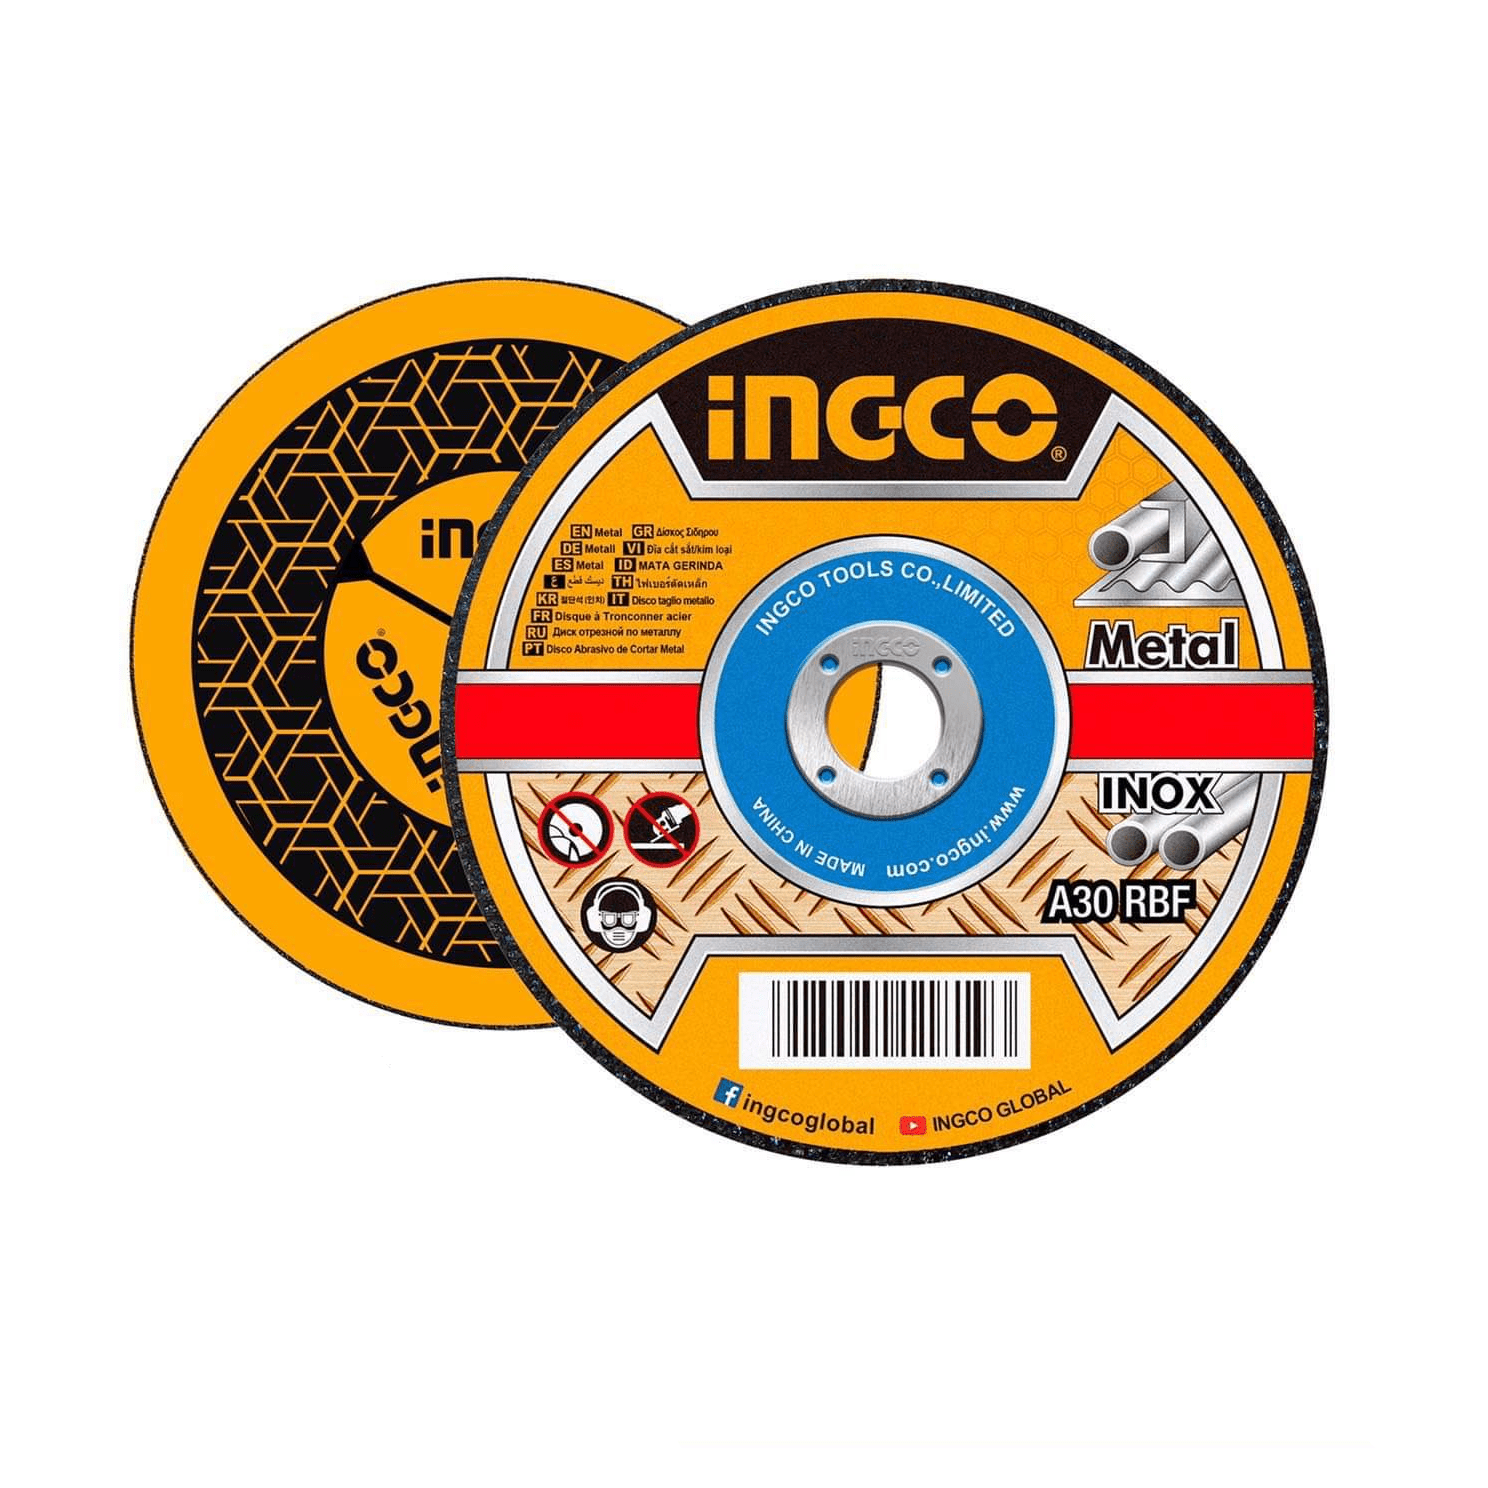 Ingco Abrasive INOX - Metal Cutting Disc 125 X 1.2mm Set 10pcs - MCD121255 | Supply Master Accra, Ghana Grinding & Cutting Wheels Buy Tools hardware Building materials